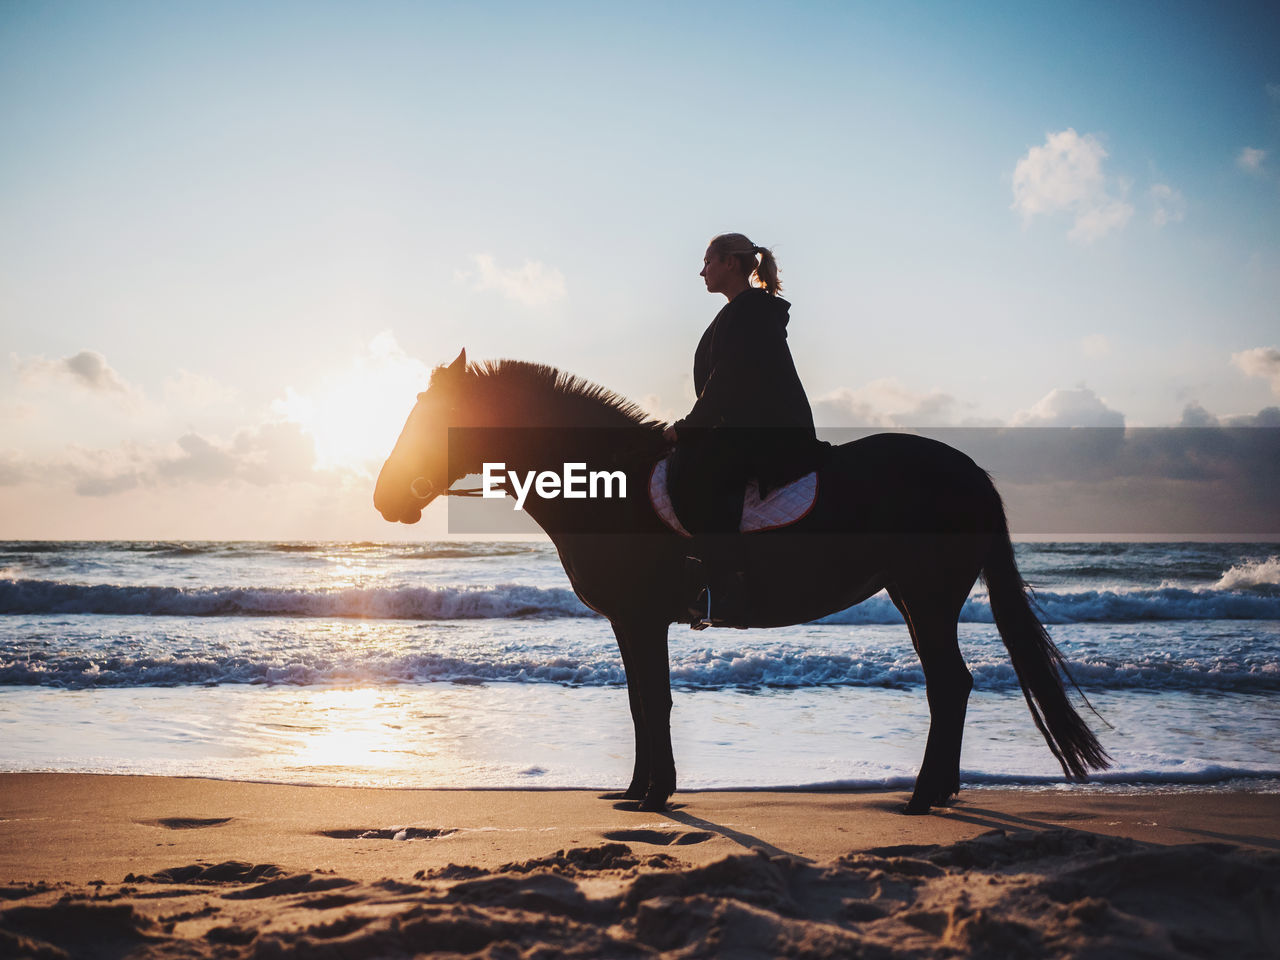 Woman horseback riding at beach